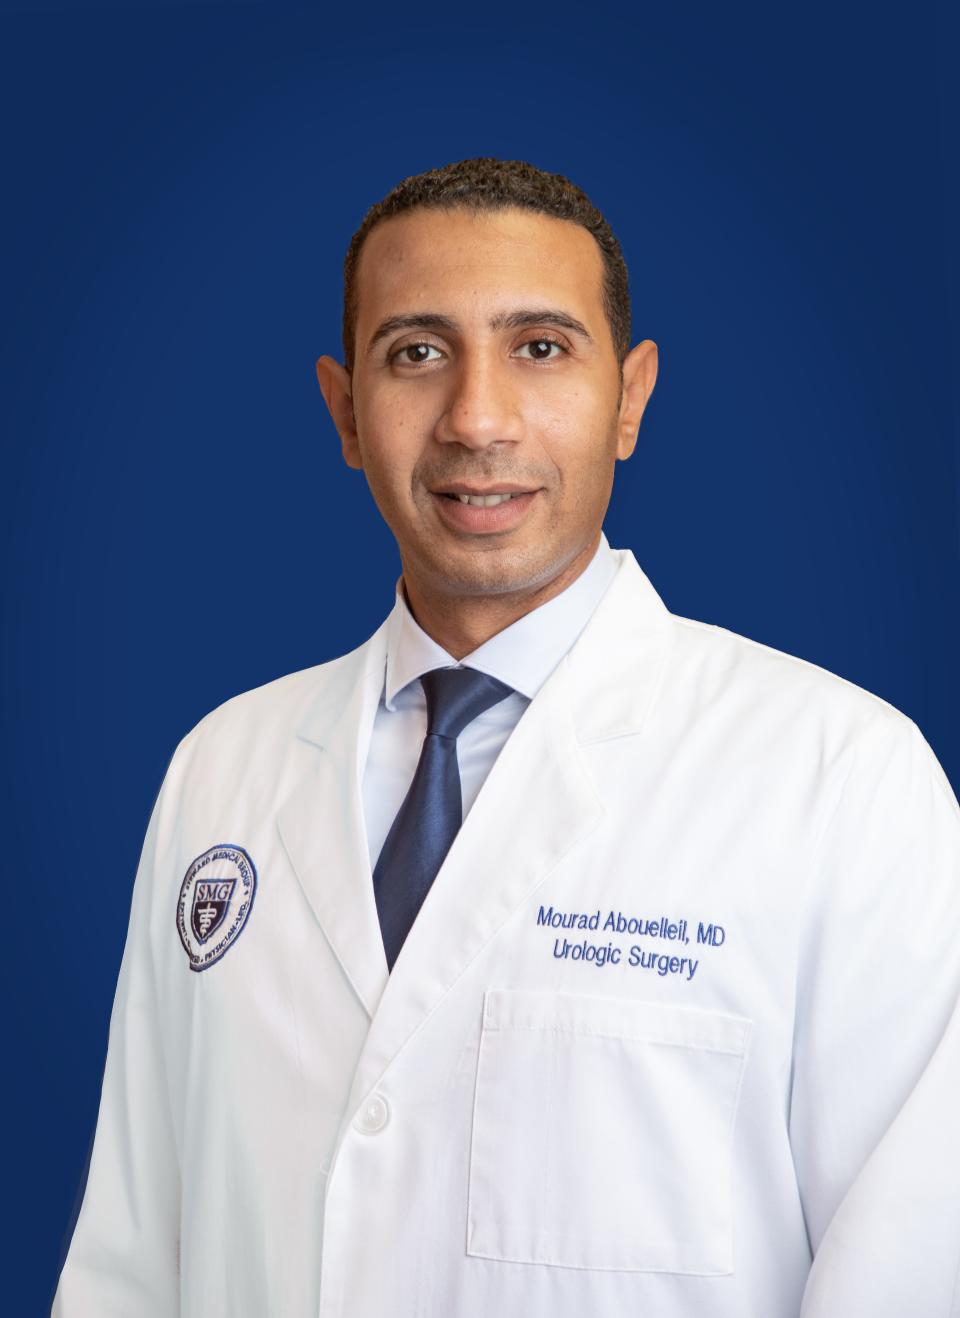 Dr. Mourad Abouelleil is a urology specialist for Steward Urology Associates in Viera.